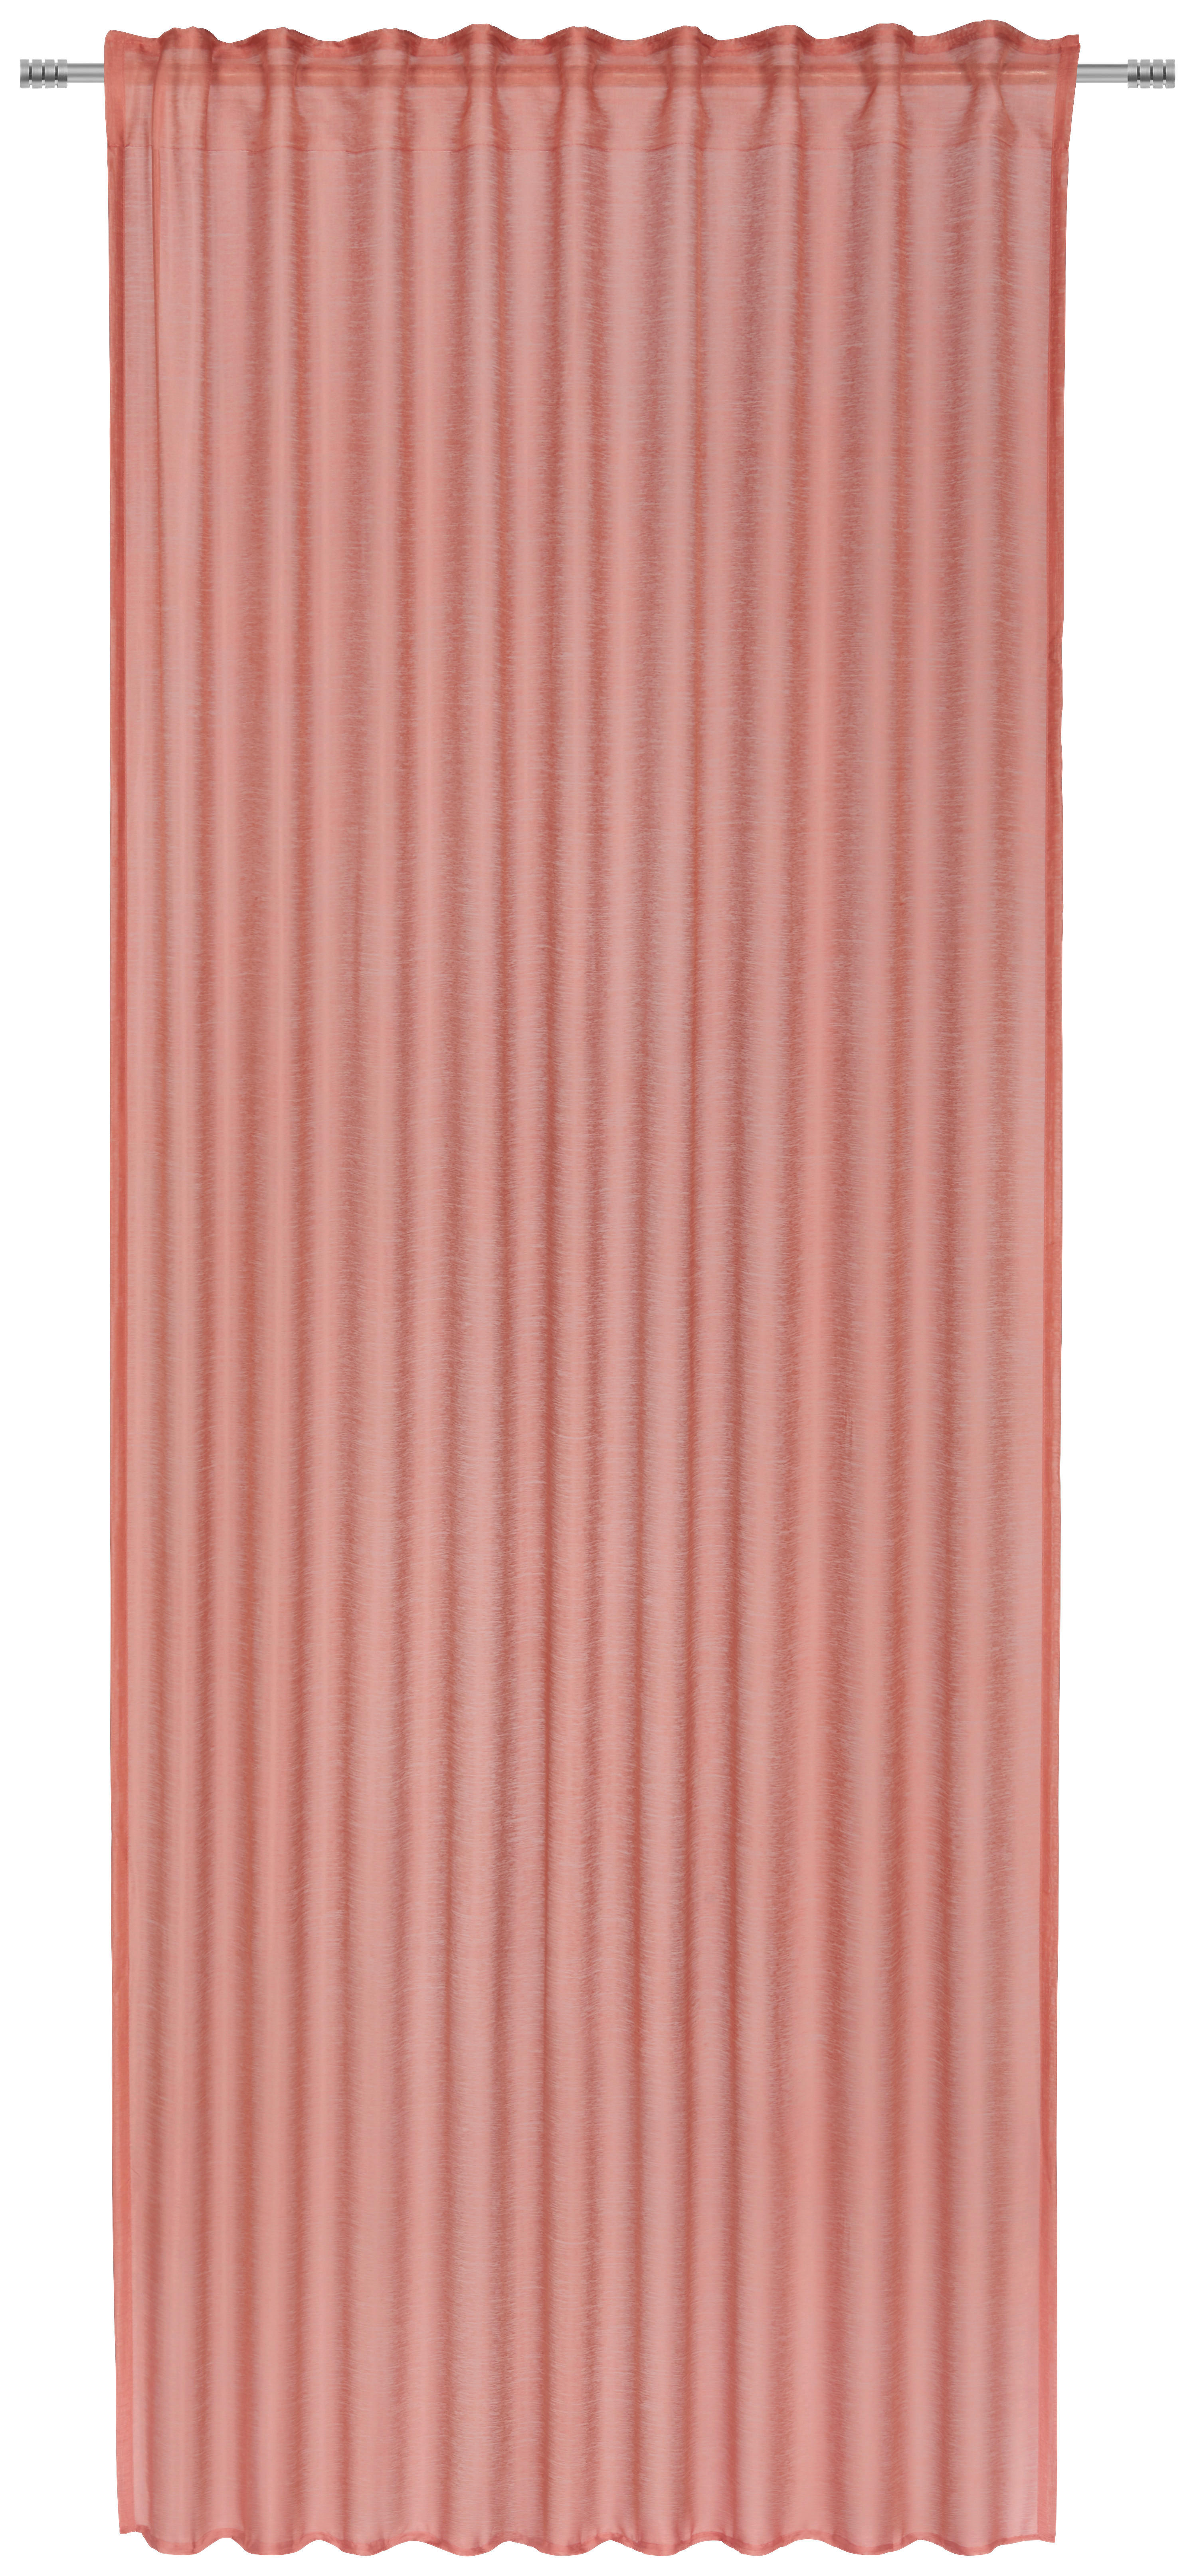 Esposa HOTOVÝ ZÁVĚS, poloprůhledné, 135/245 cm - růžová